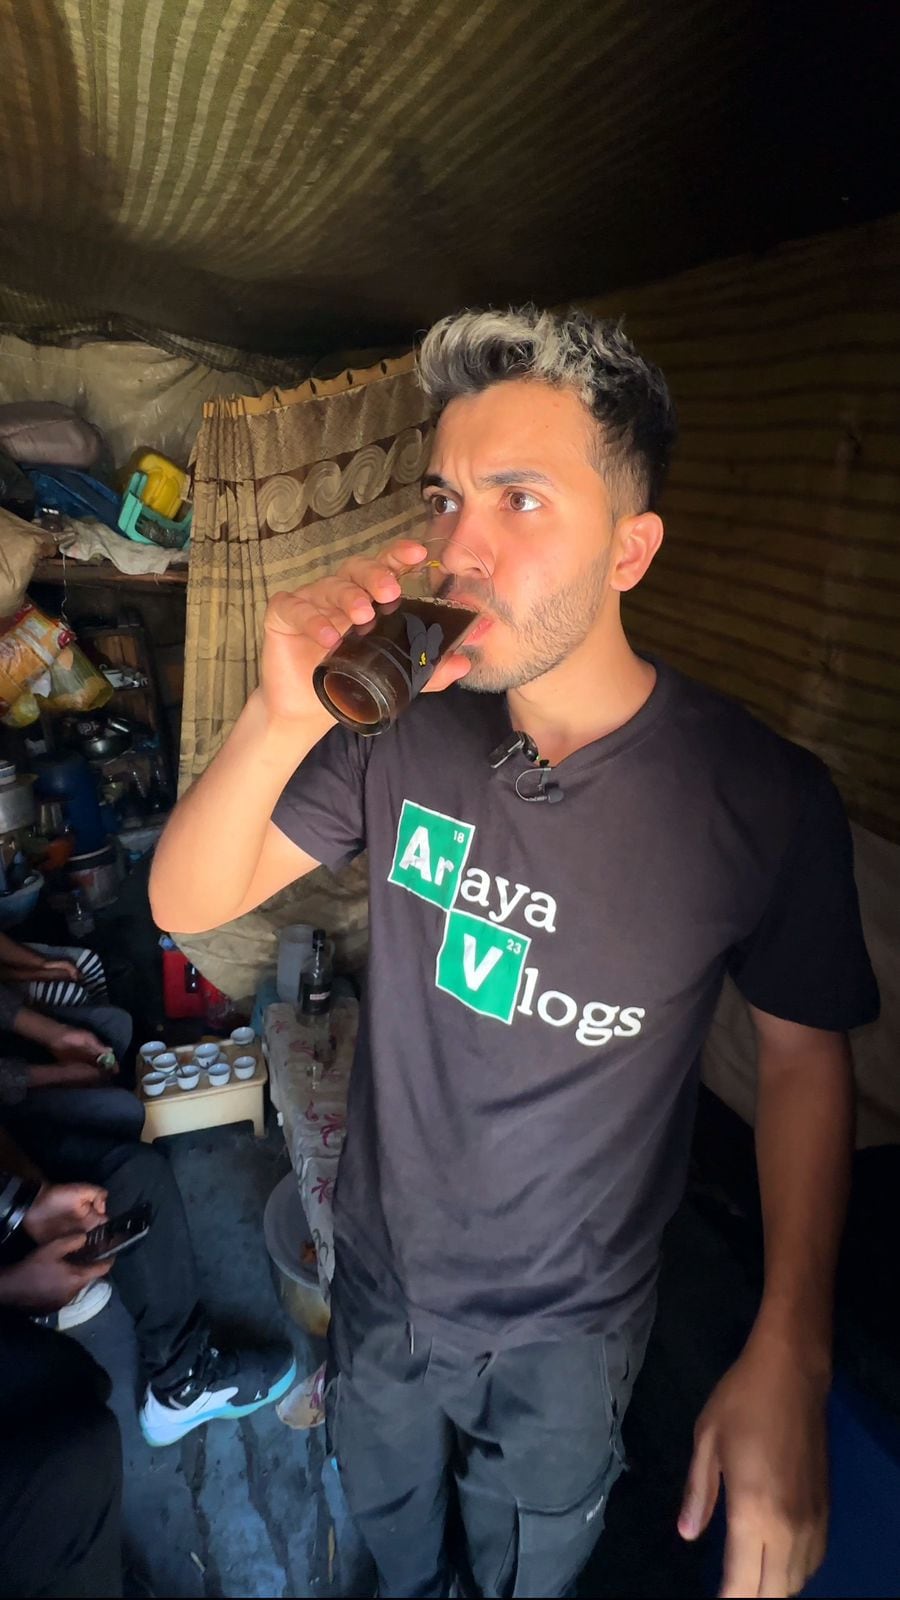 El costarricense Araya Vlogs probó una cerveza casera en Etiopía. Foto: Araya Vlogs para LN.